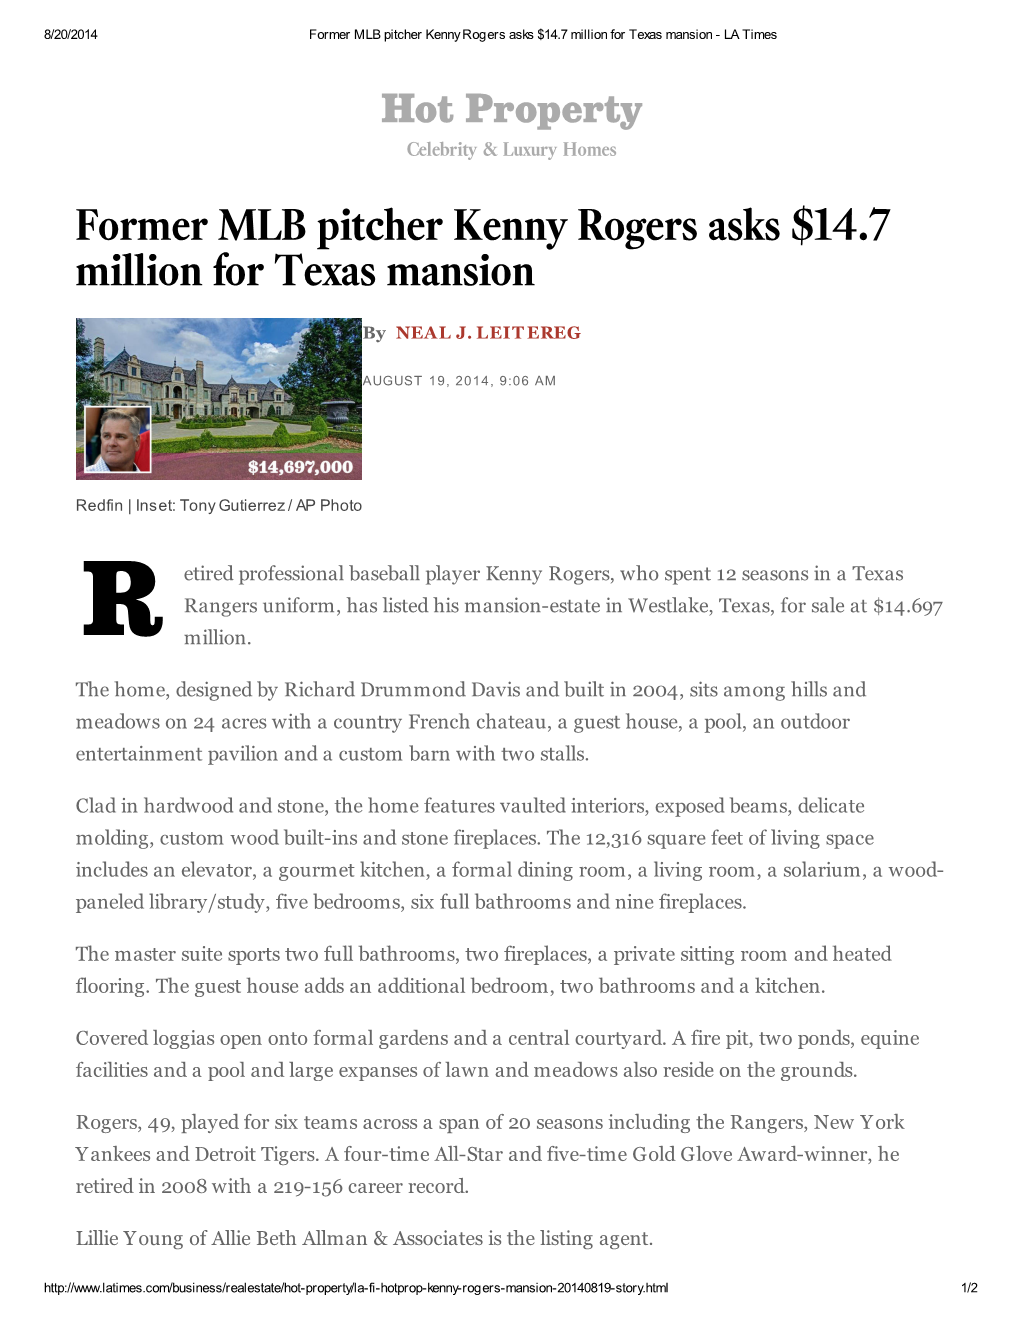 Former MLB Pitcher Kenny Rogers Asks $14.7 Million for Texas Mansion - LA Times